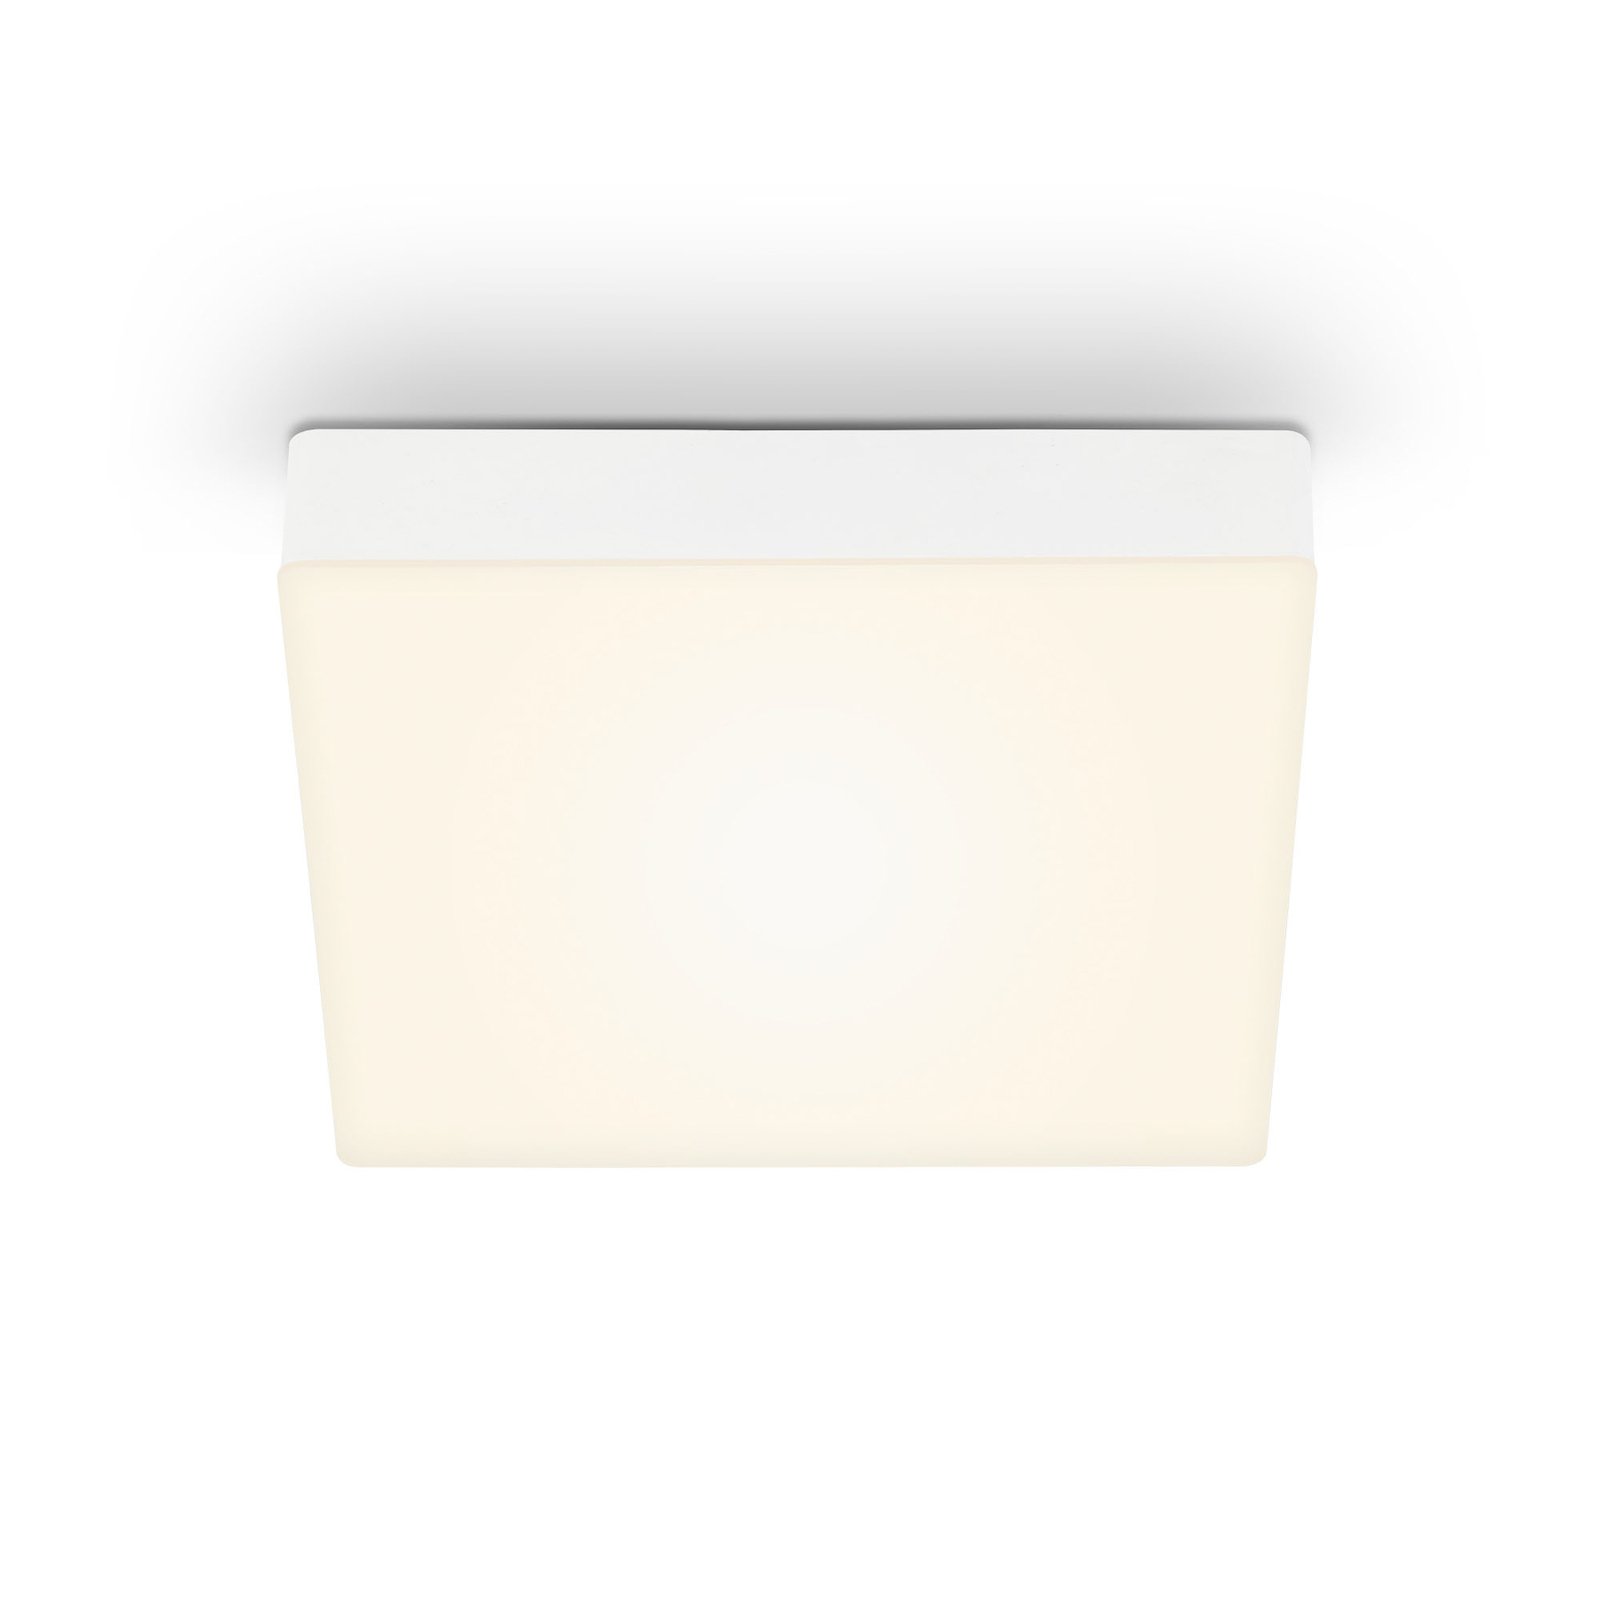 Flame LED-kattovalaisin, 21,2 x 21,2 cm, valkoinen